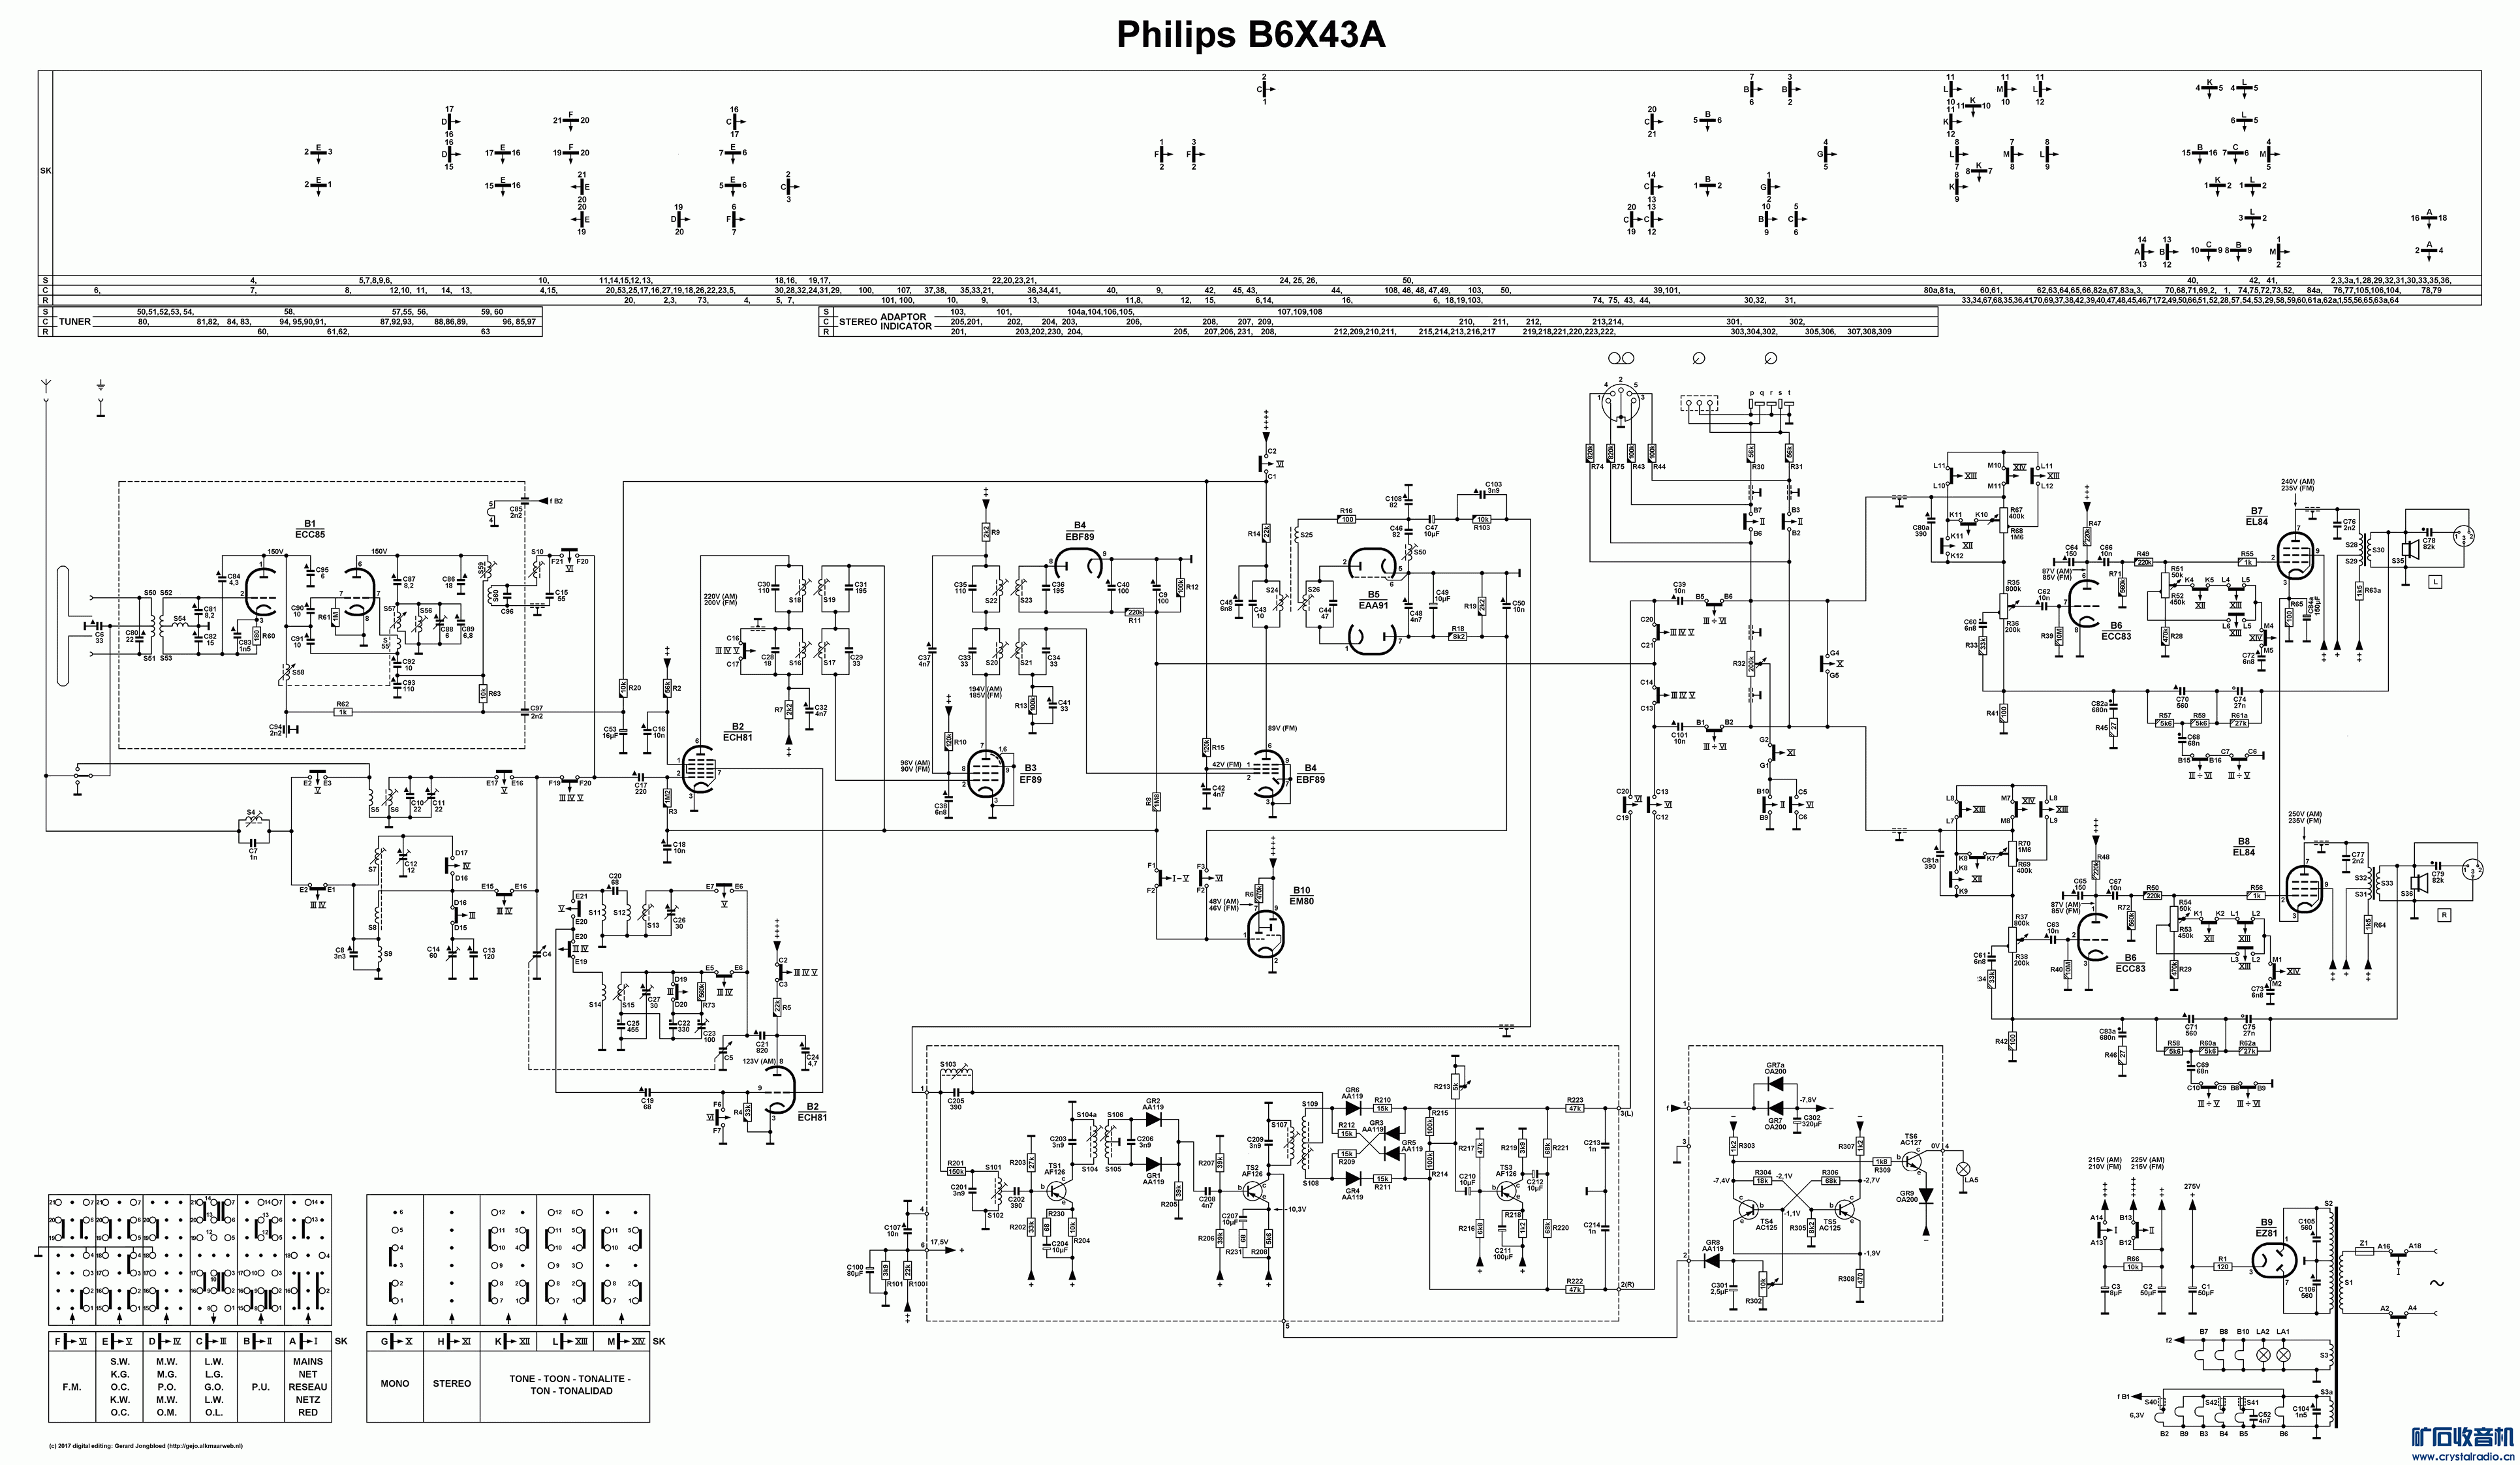 philips-b6x43a-schema1.gif